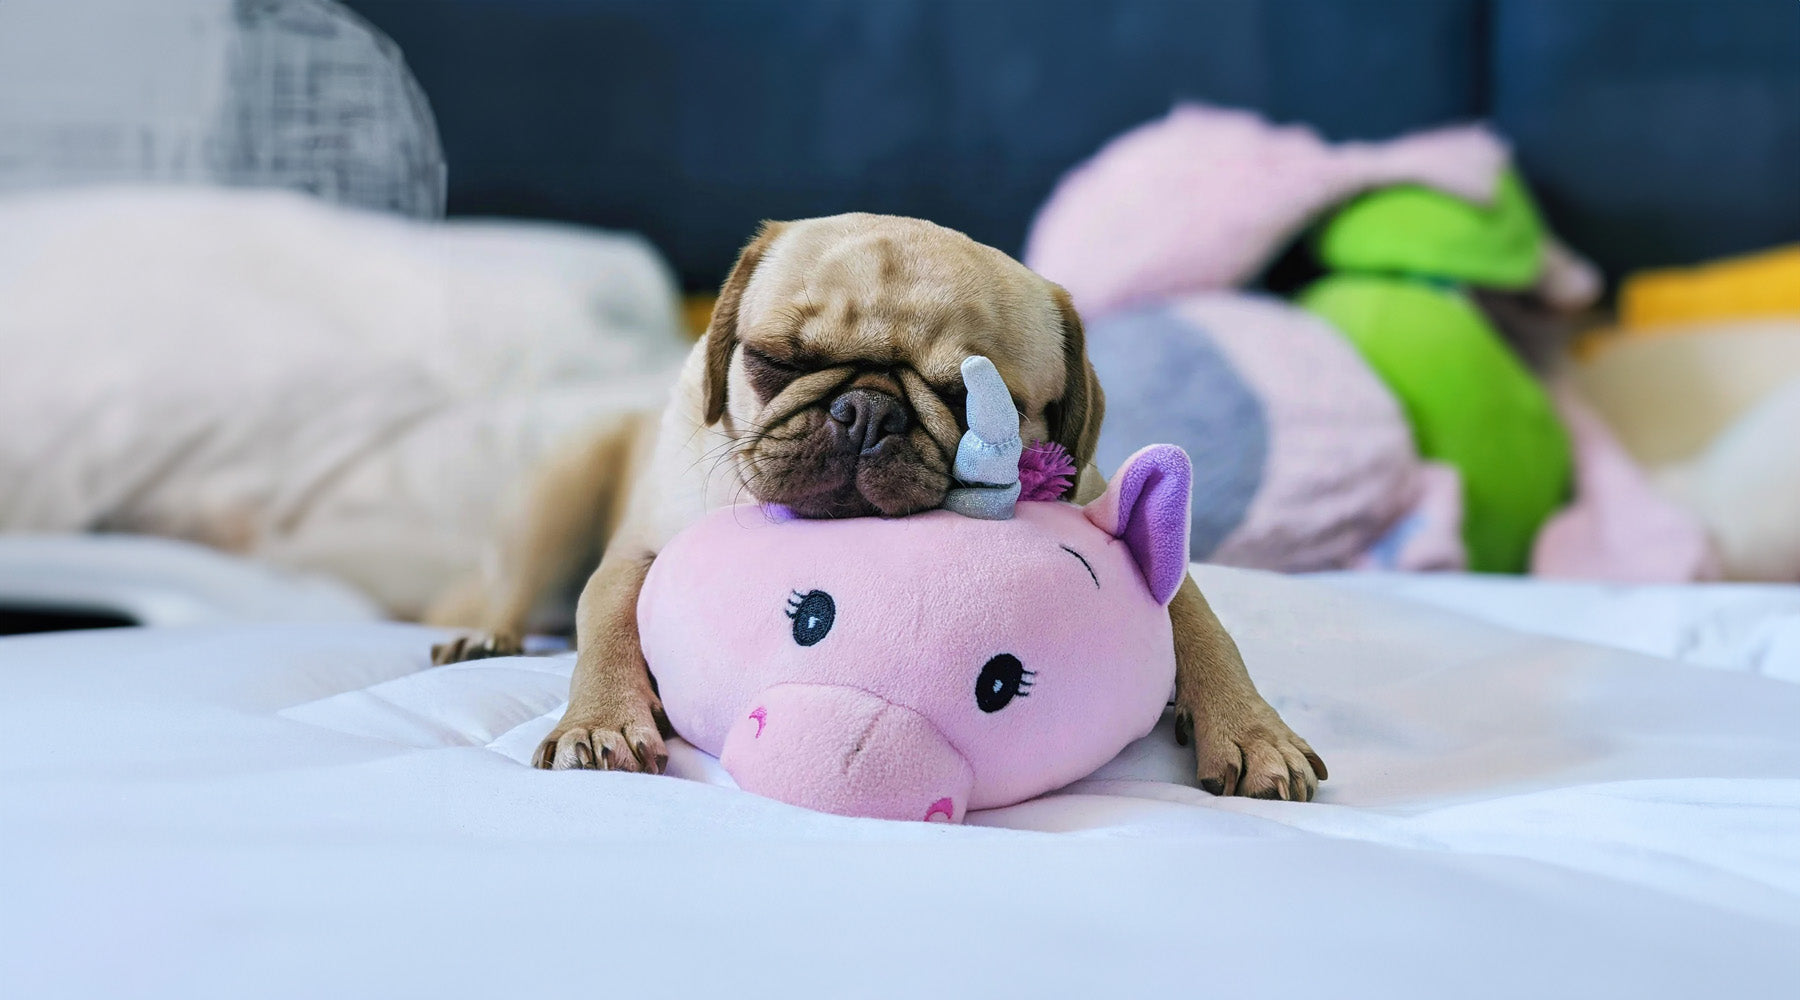 Sleeping pug on toy 